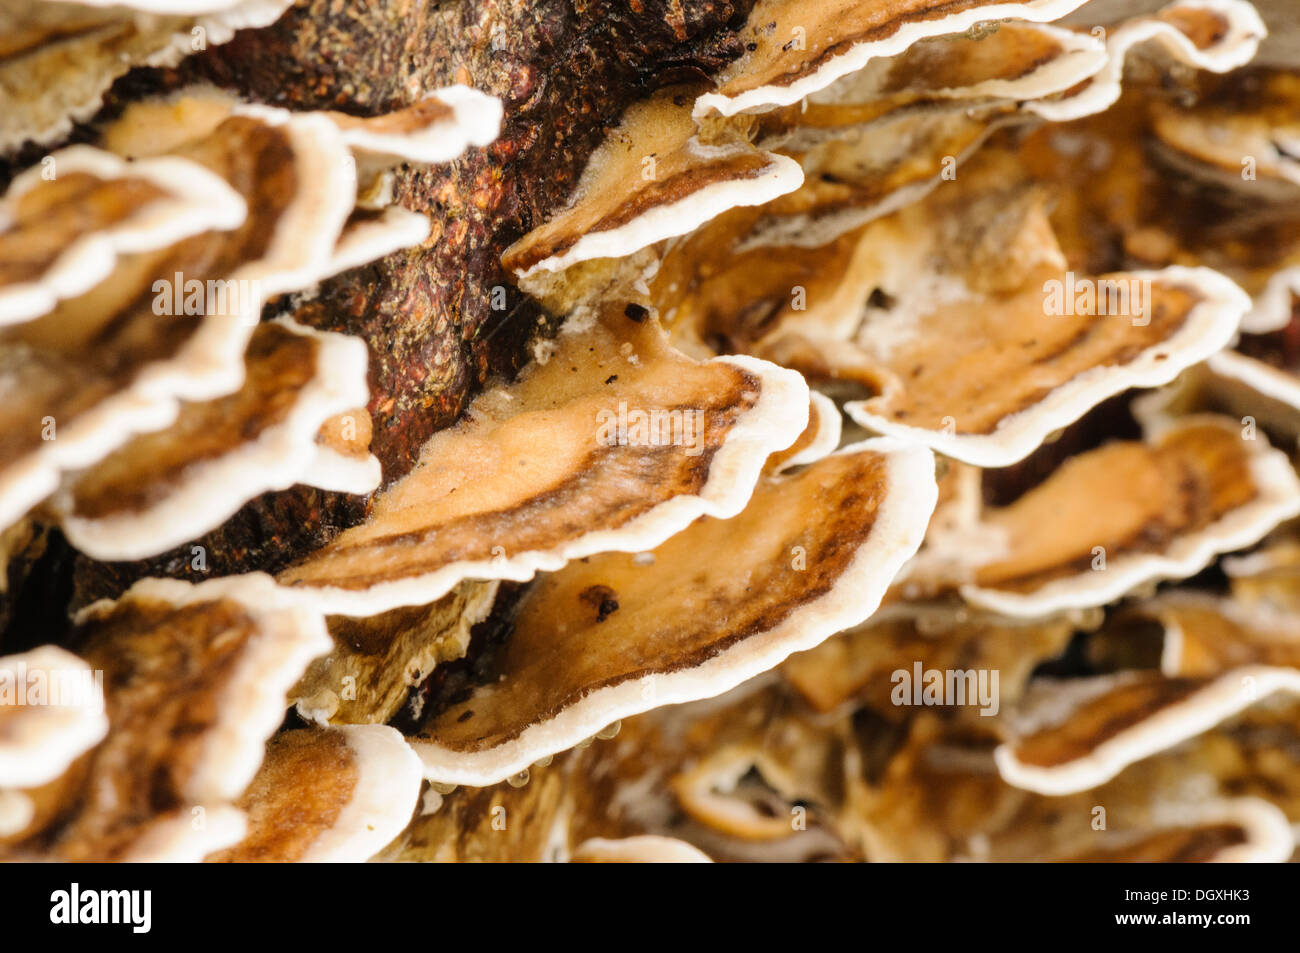 Trembling merulius (Merulius tremellosus, Phlebia tremellosa), a gelatinous bracket fungus found on rotting wood Stock Photo